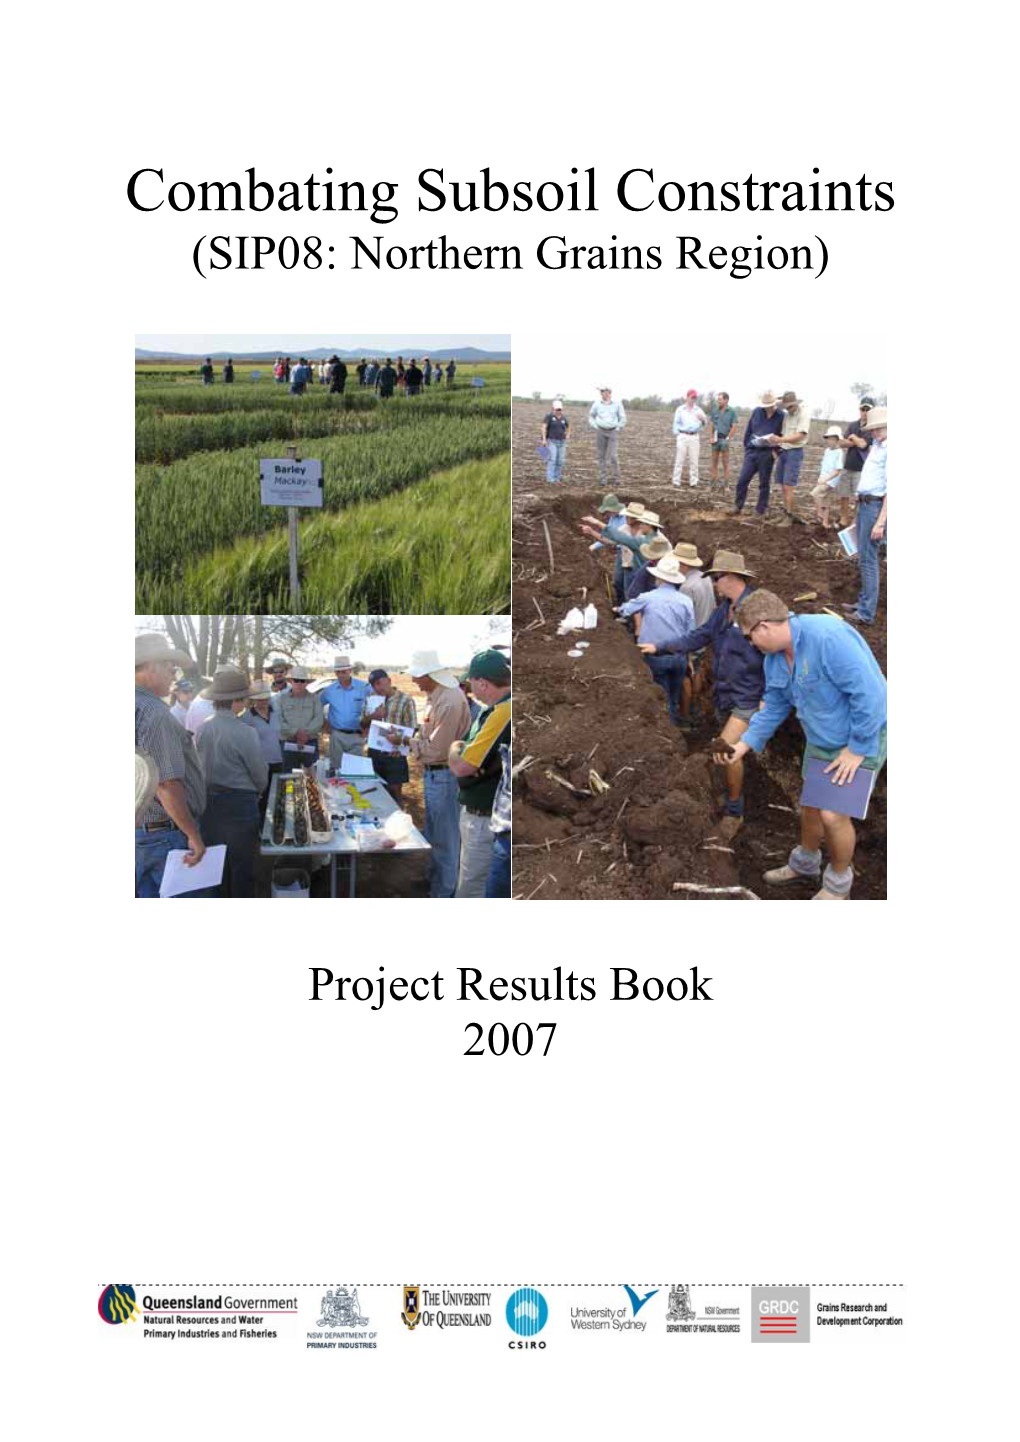 Combating Subsoil Constraints (SIP08: Northern Grains Region)